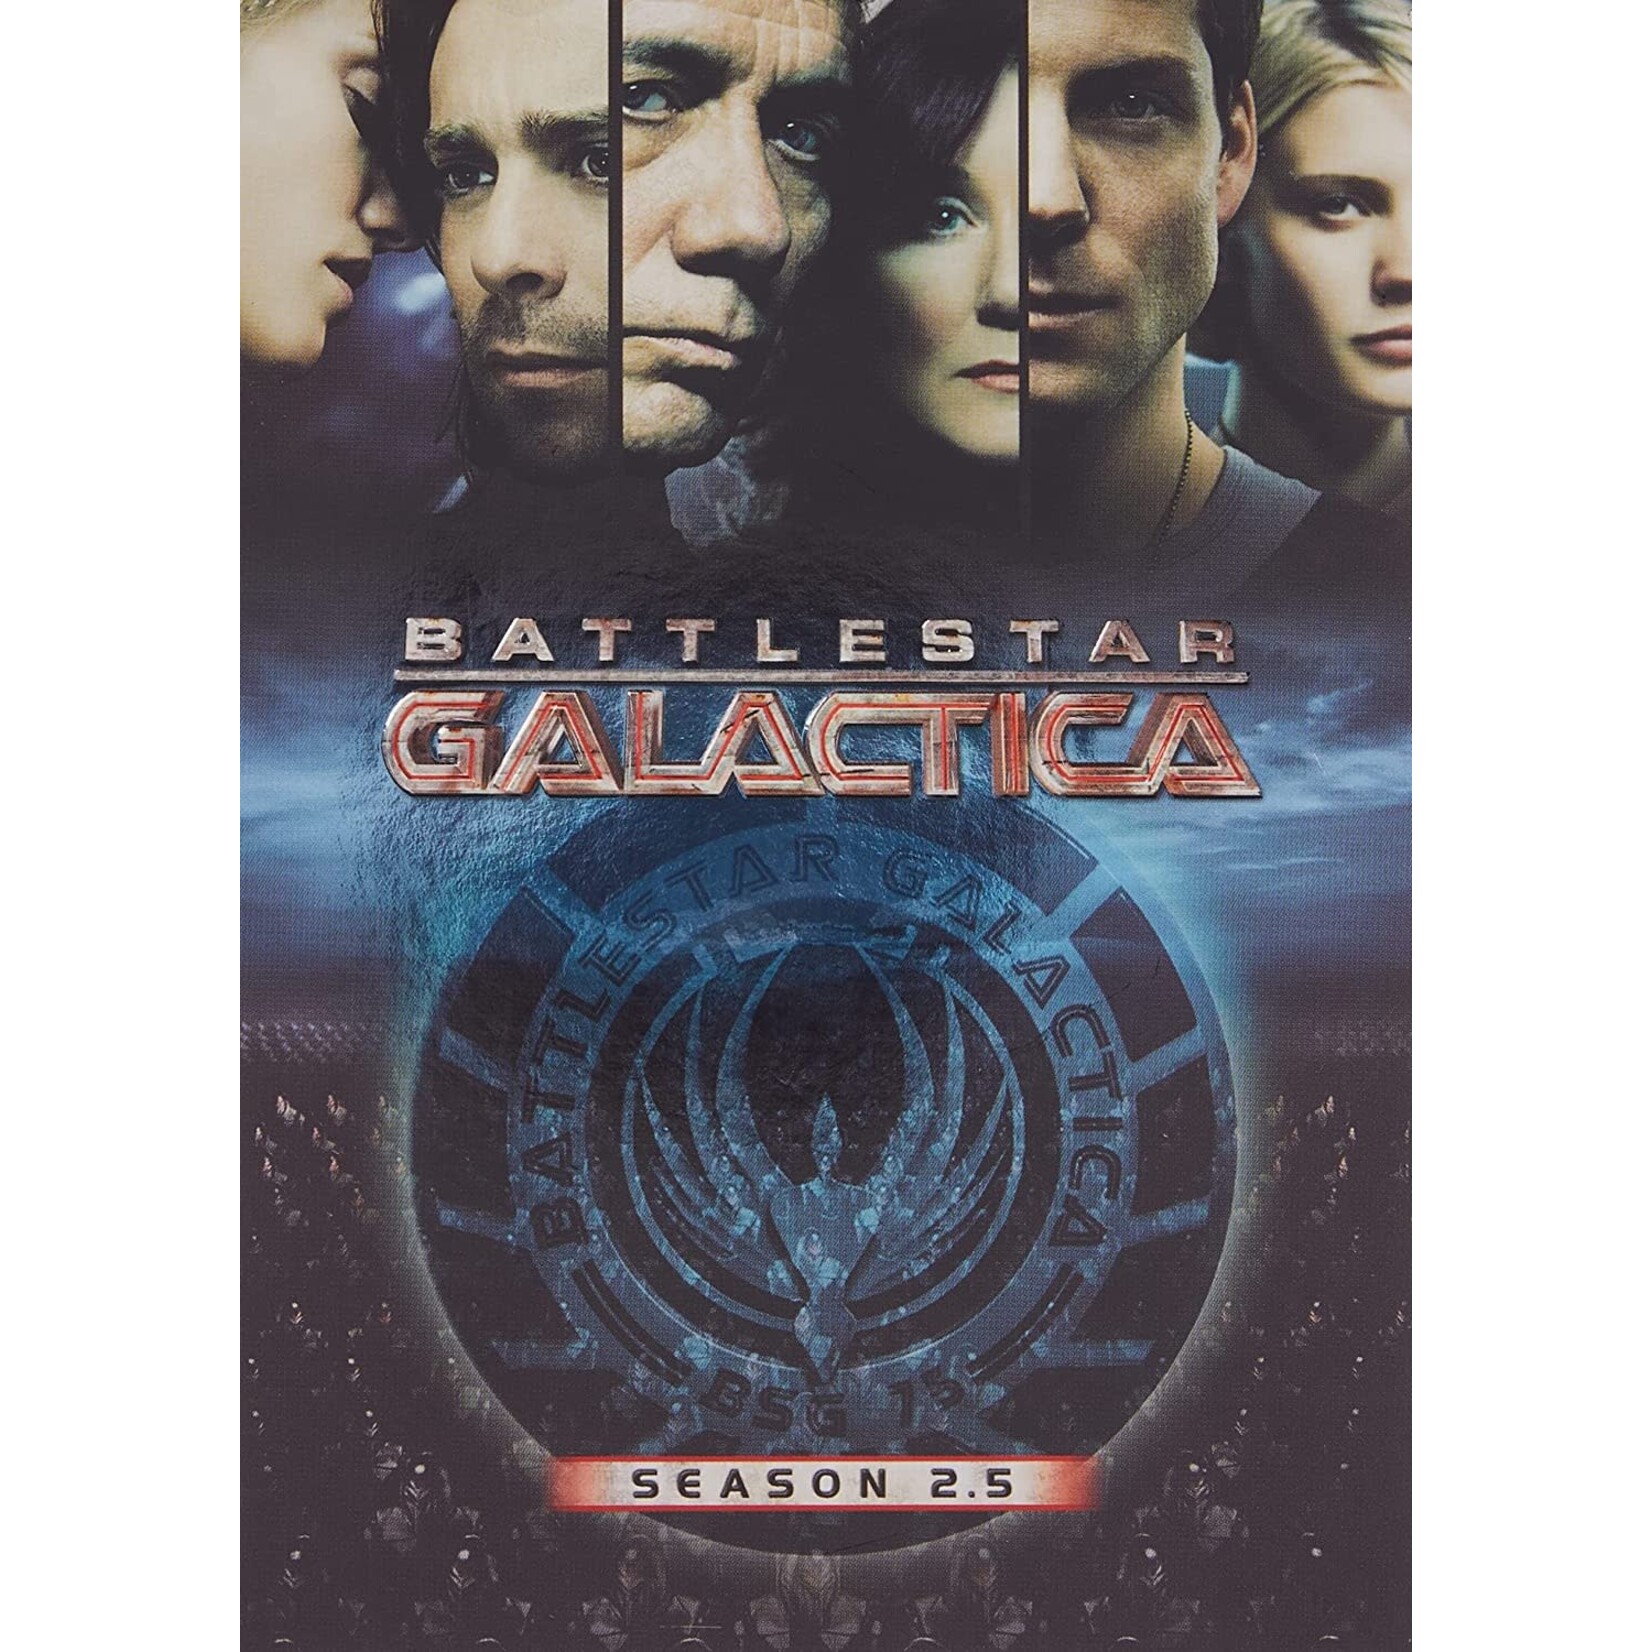 Battlestar Galactica (New Series) - Season 2.5 [USED DVD]